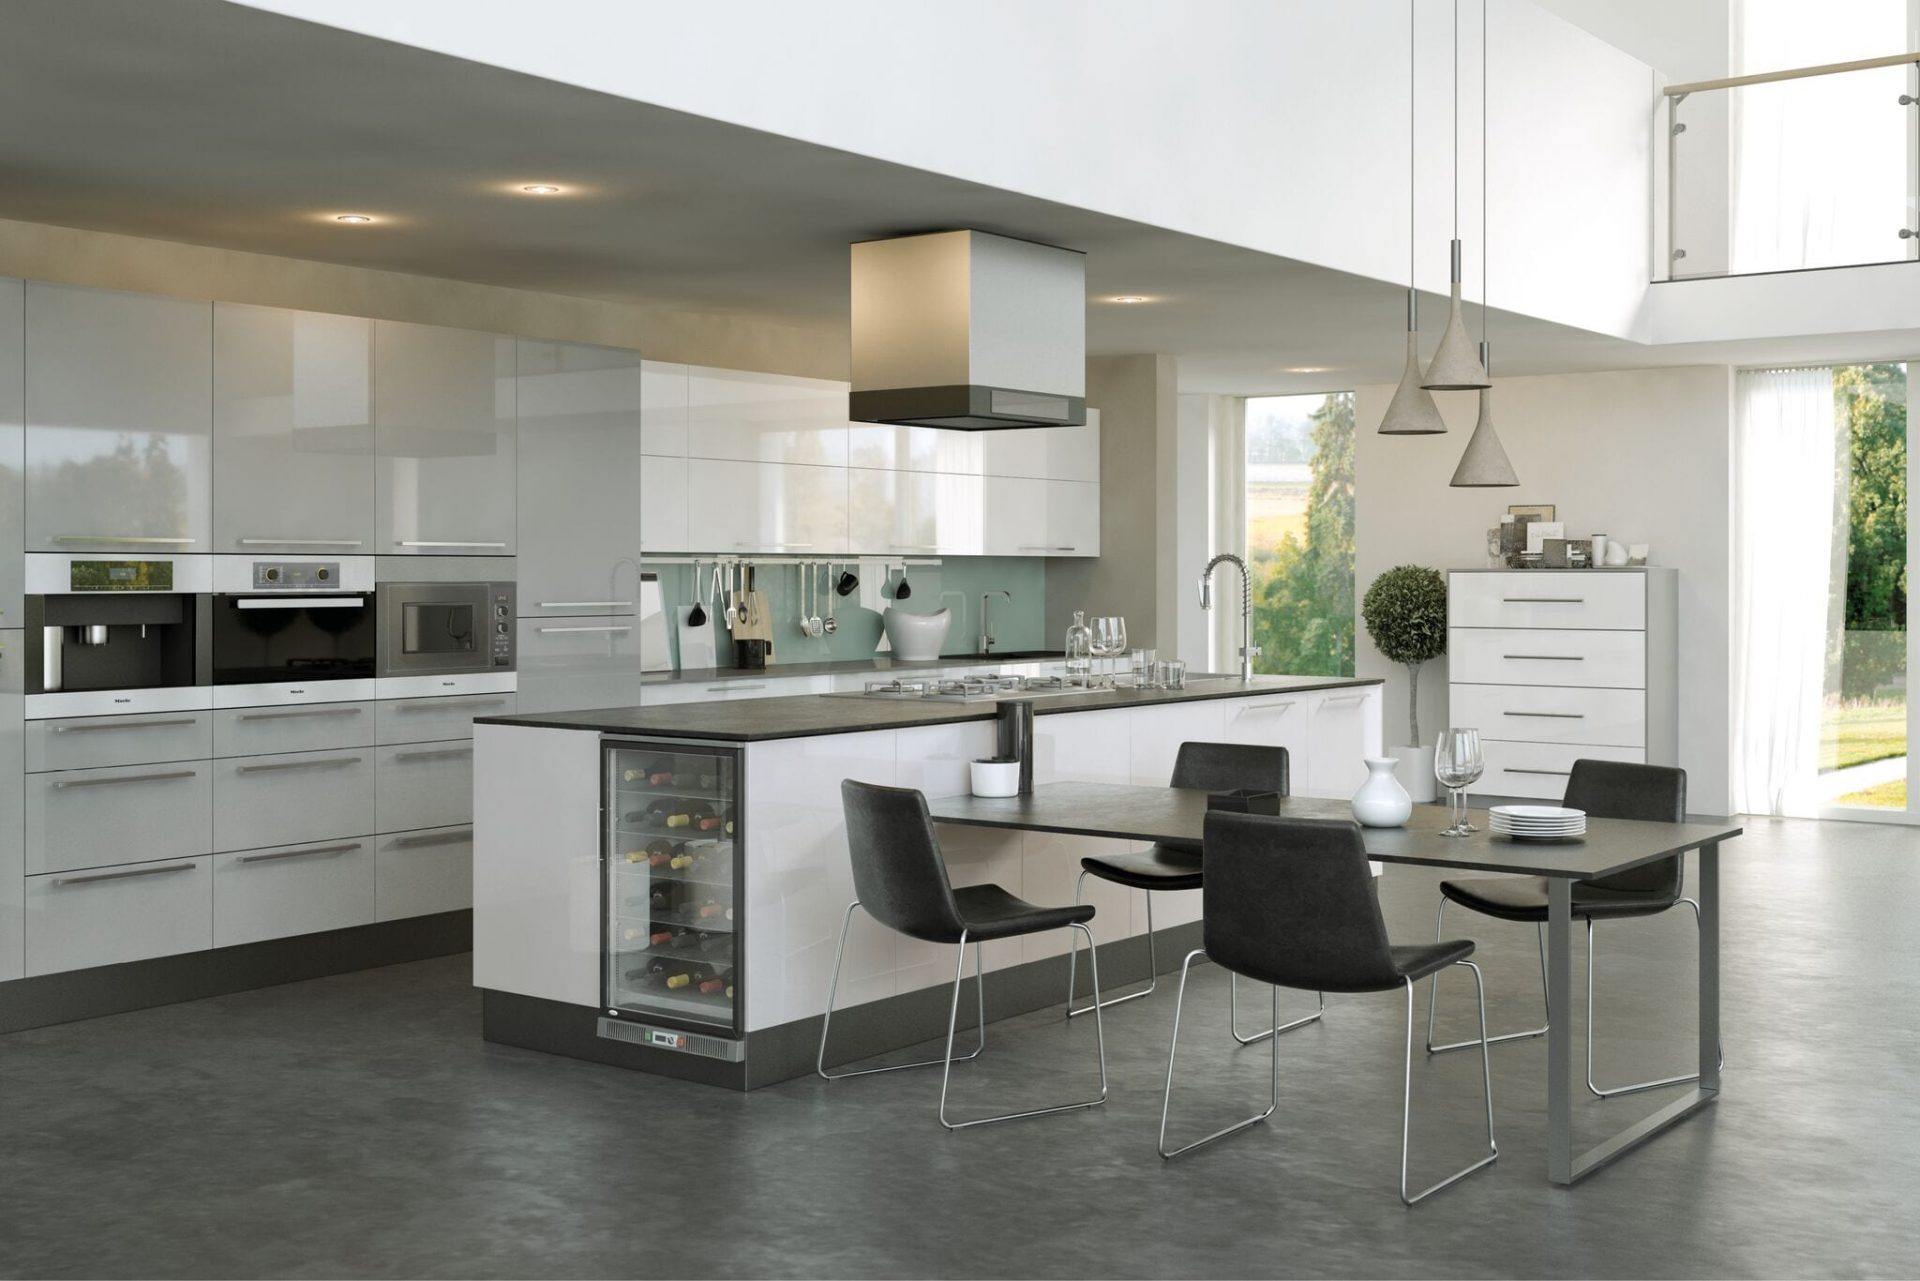 Firbeck flat panel kitchen in light grey